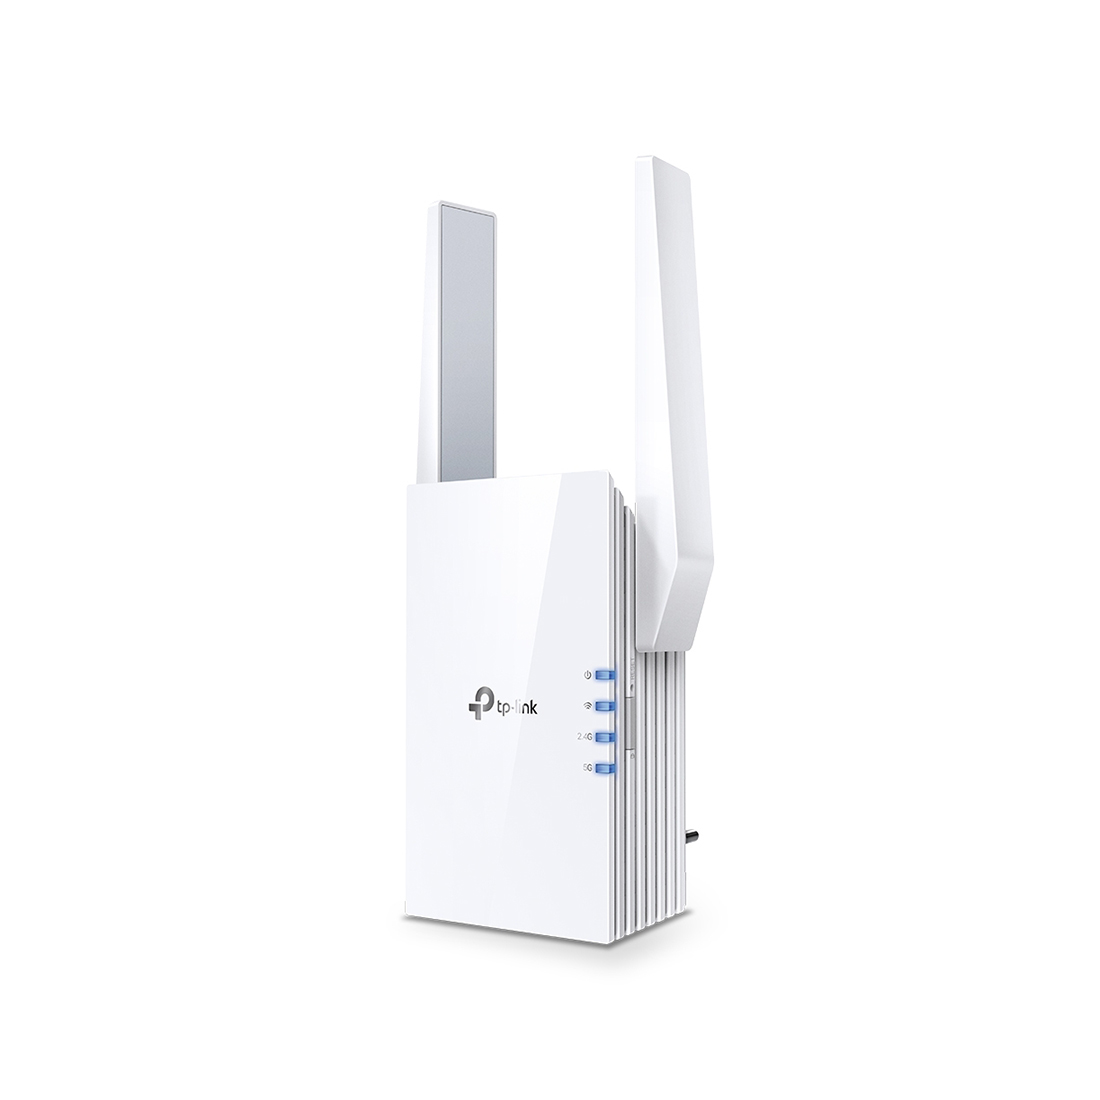 Усилитель Wi-Fi сигнала, TP-Link, RE505X, 802.11a/b/g/n/ac/ax, AX1500, 2 внешние антенны, 1 порт 10/